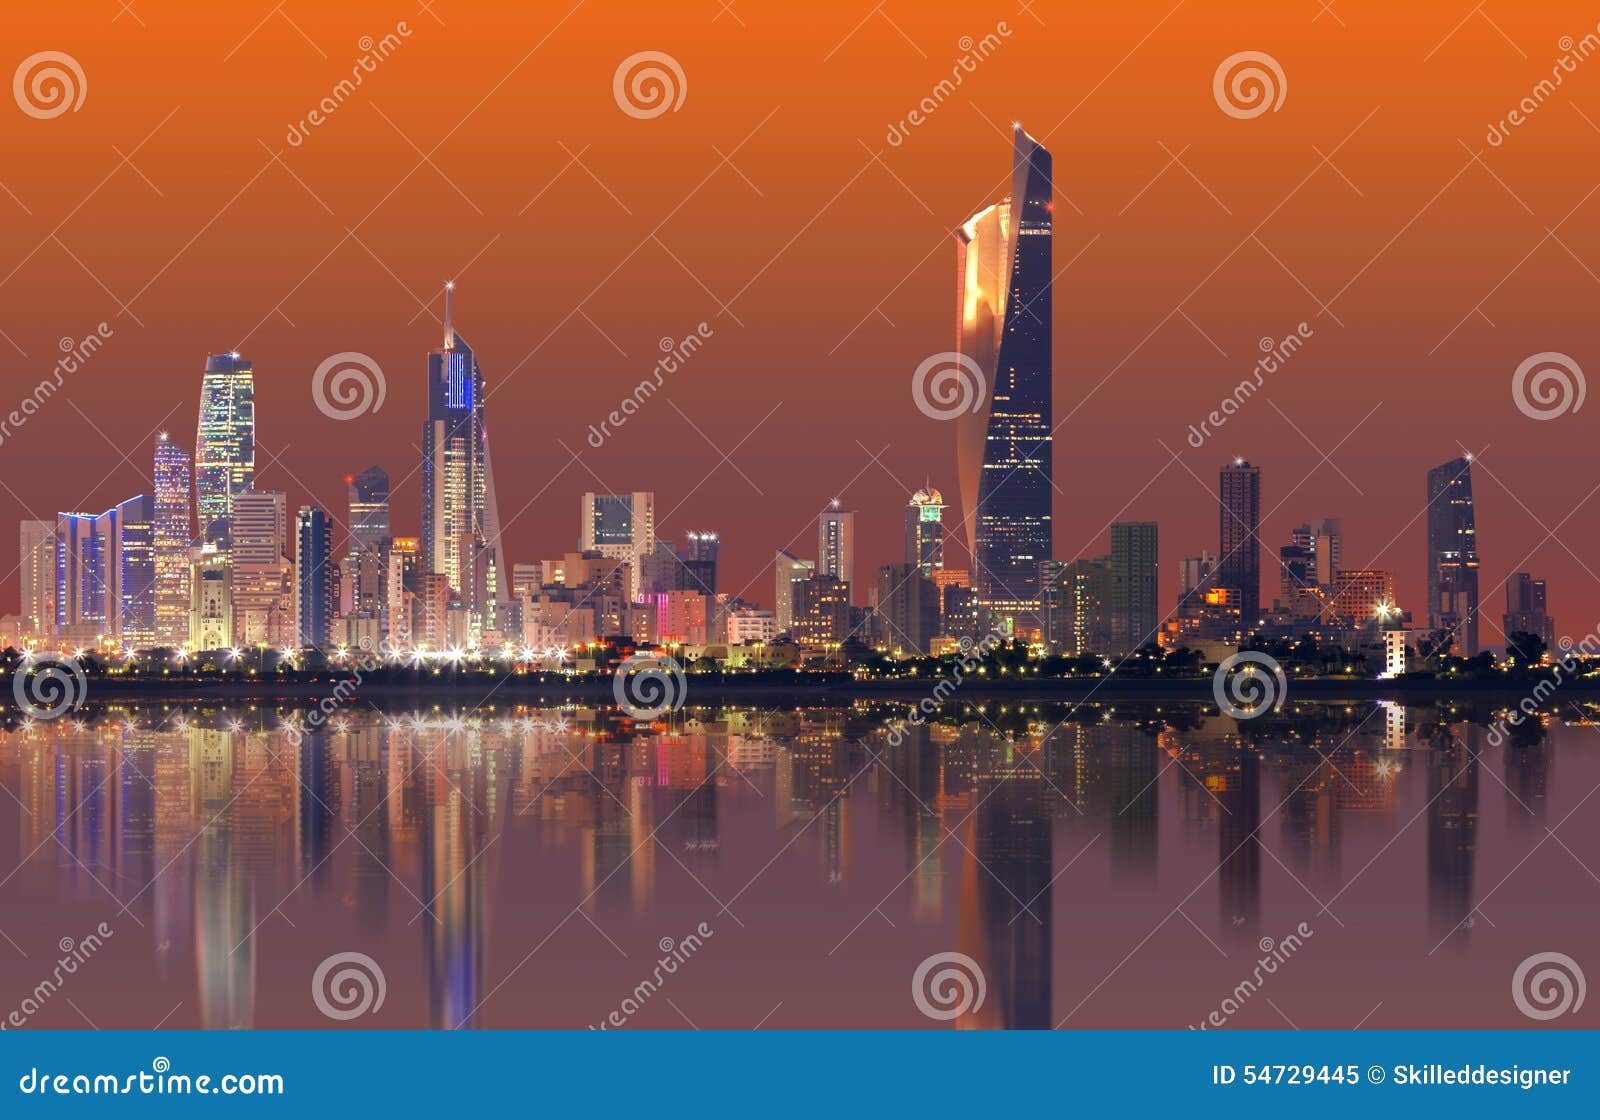 kuwait cityscape skyline